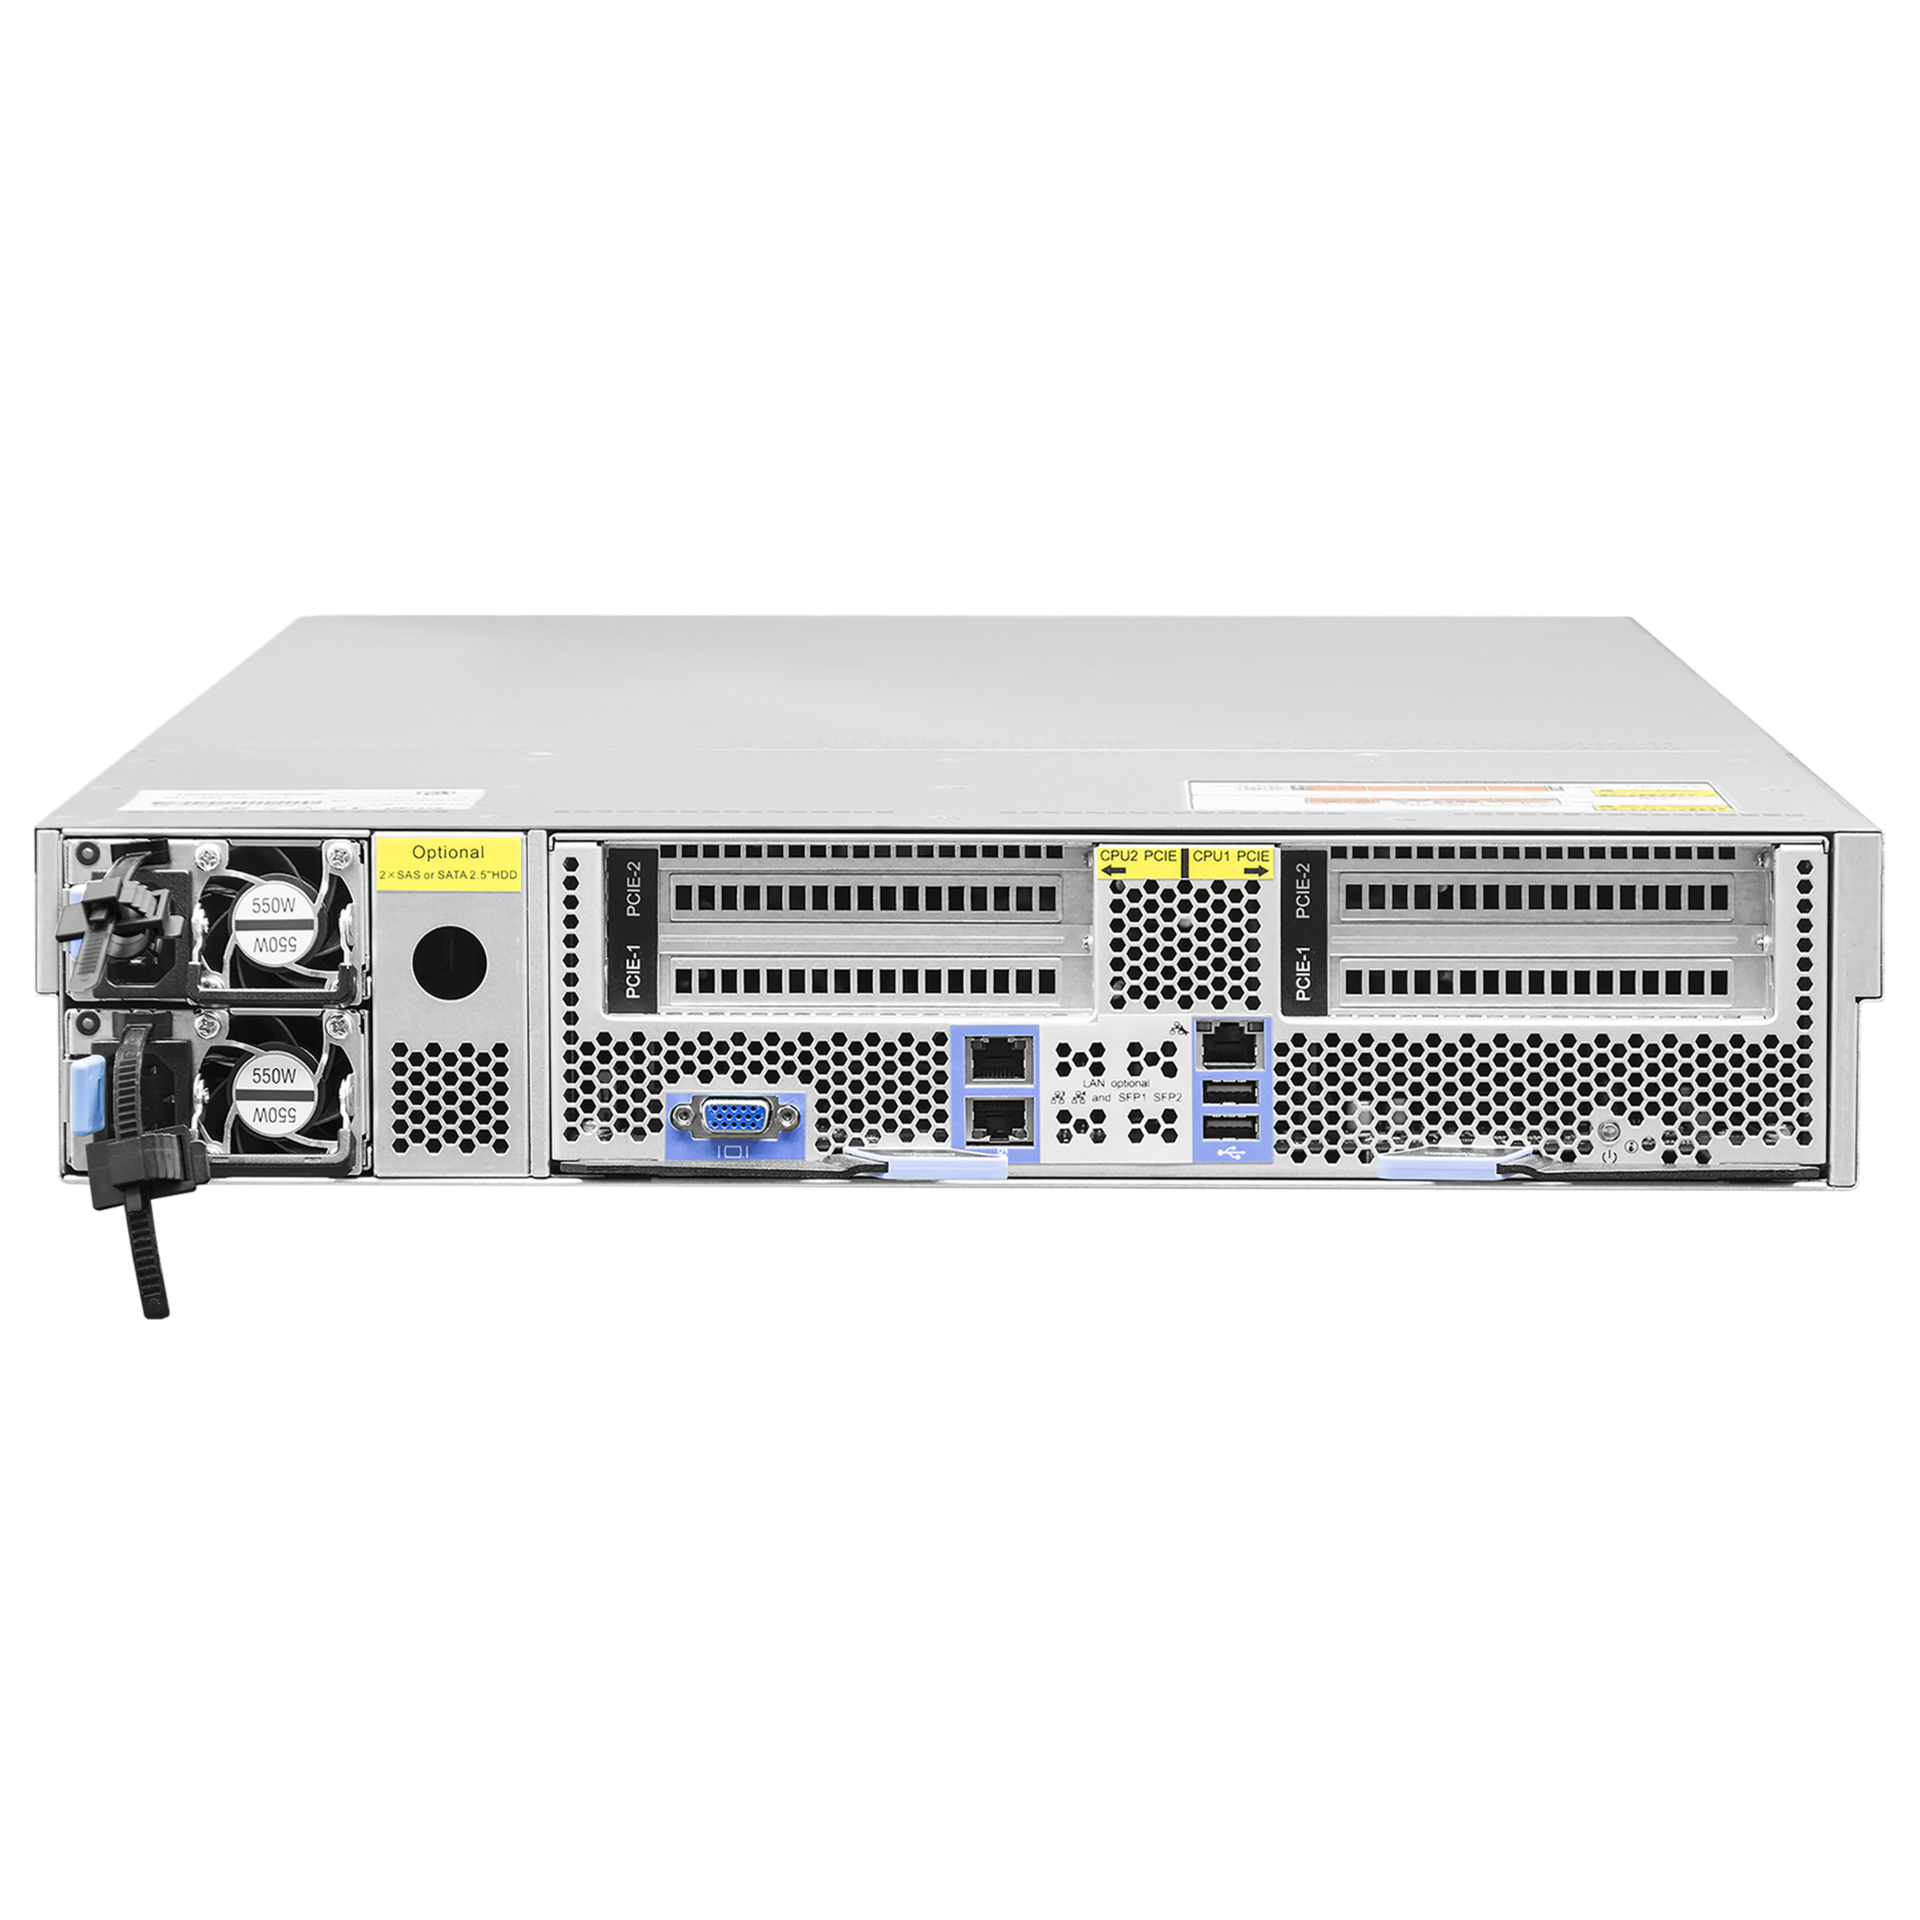 Серверная платформа SNR-SR2208R, 2U, E5-2600v4, DDR4, 8xHDD, резервируемый БП